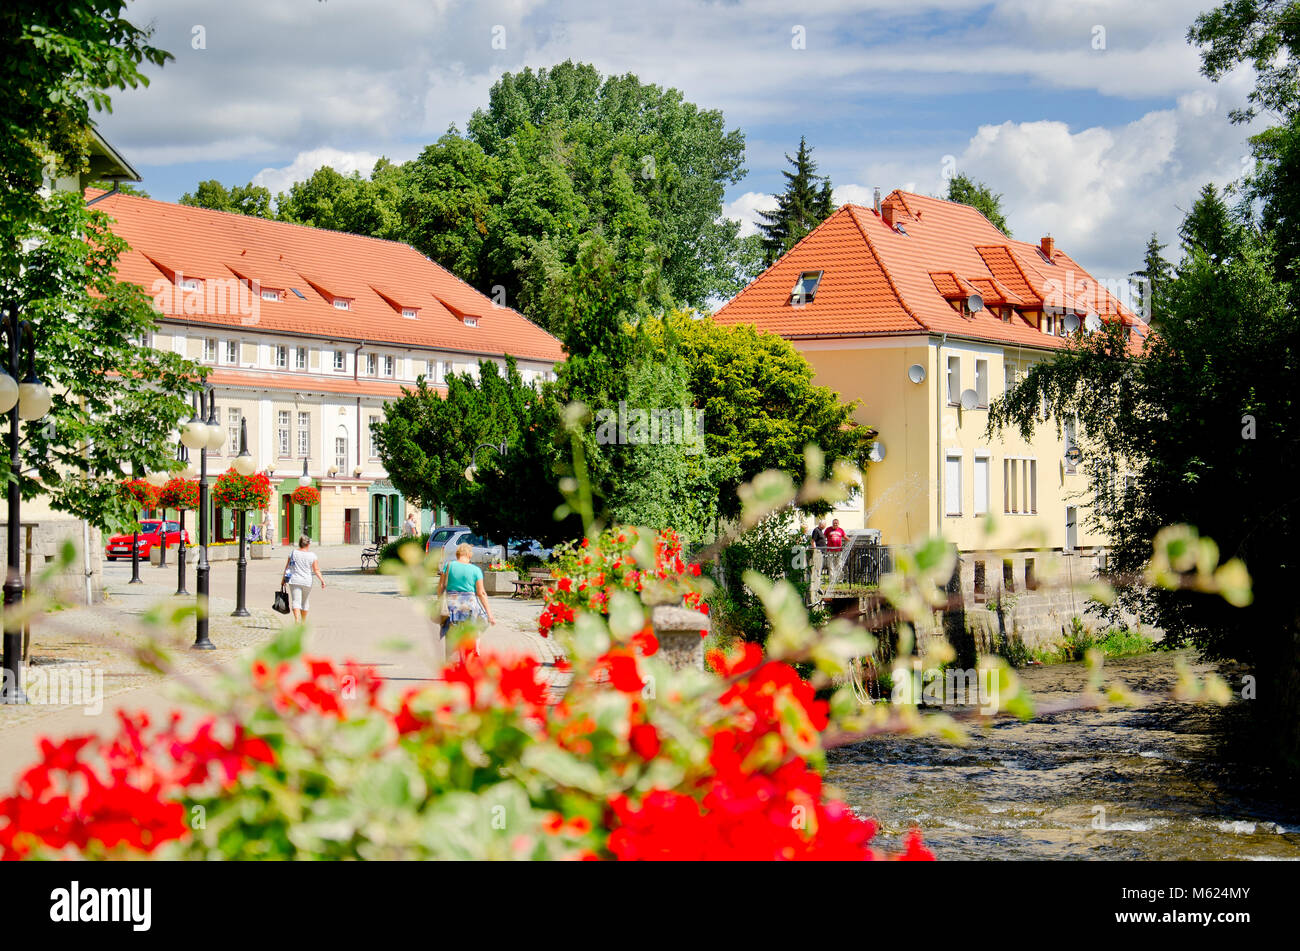 Polanica Zdroj (ger.: Altheide-Bad), spa town in Lower Silesia province, Poland, Europe. Stock Photo